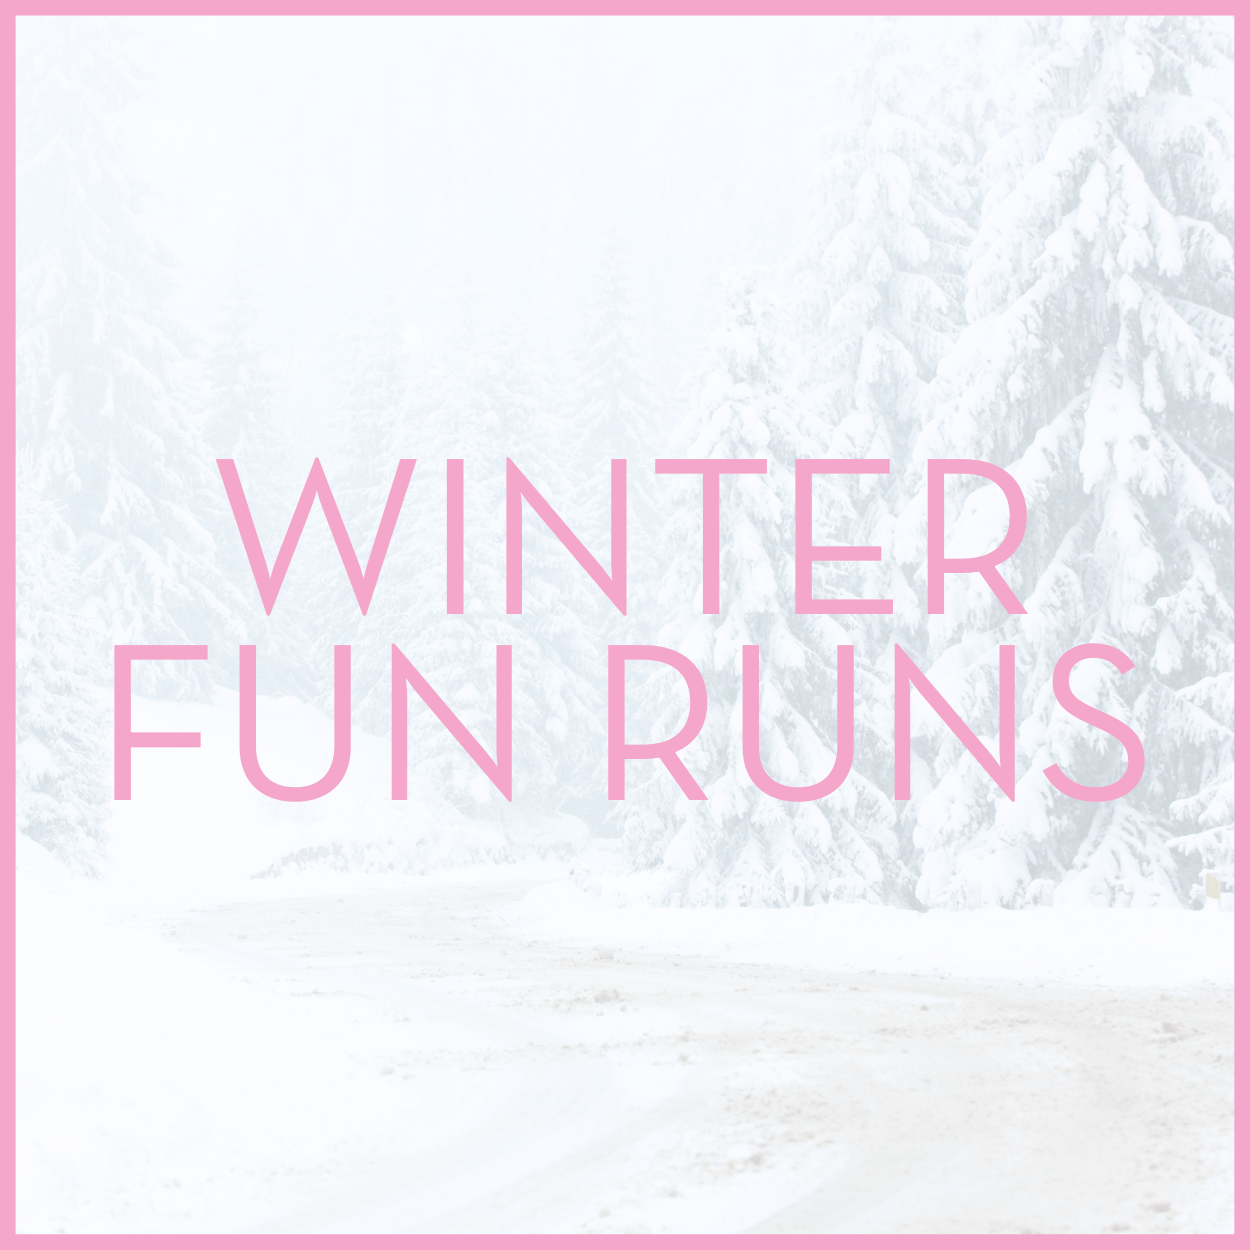 Winter fun runs